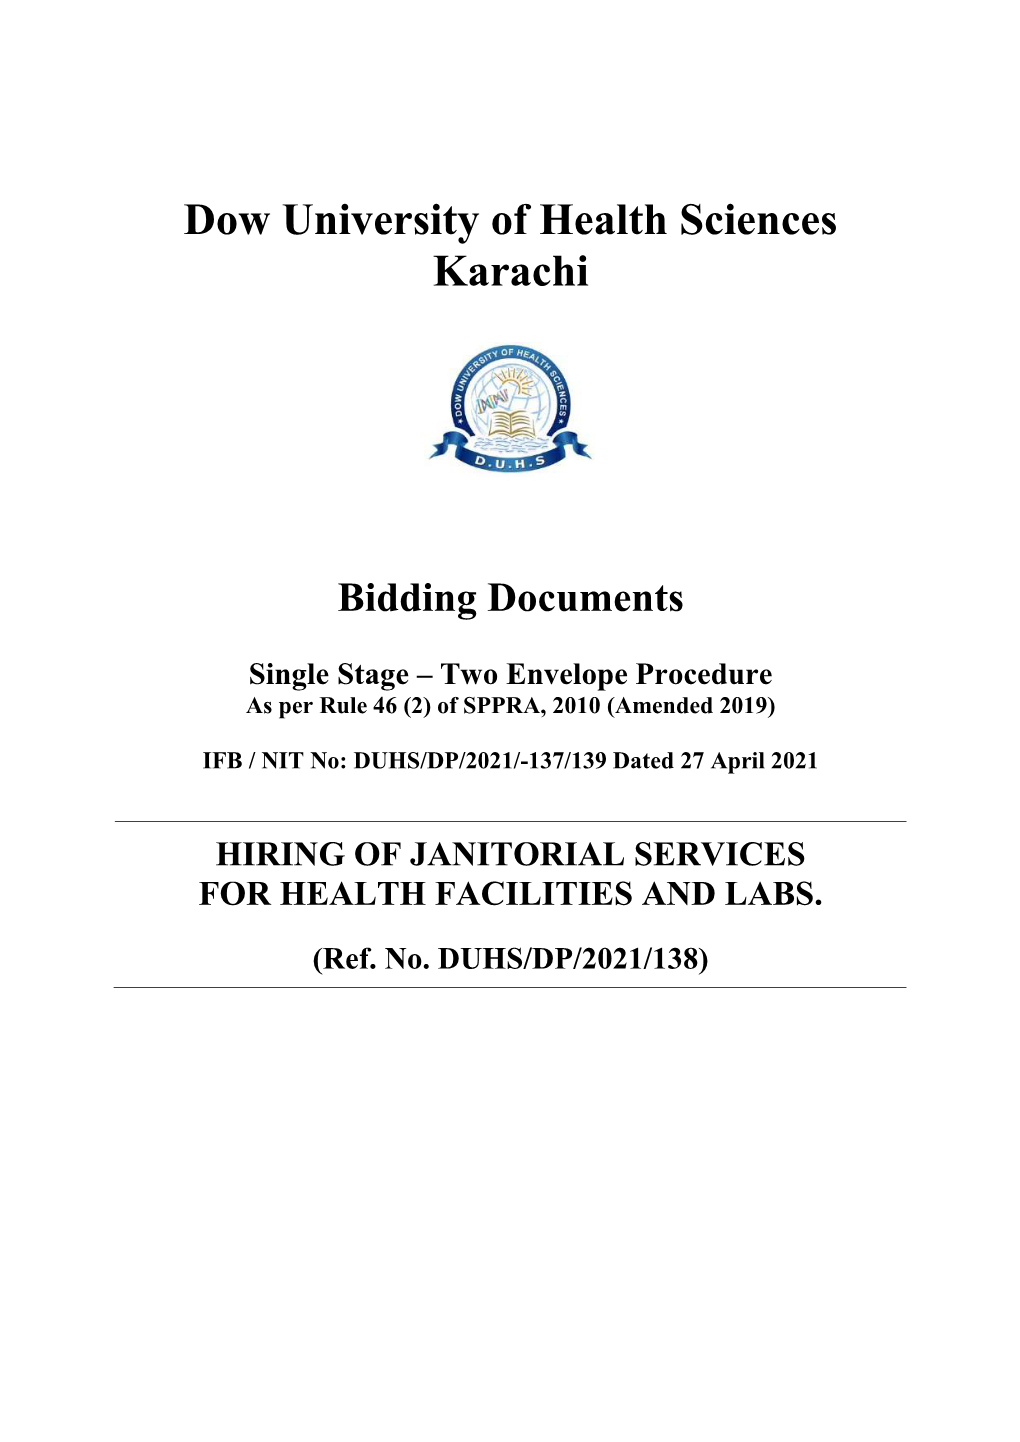 Dow University of Health Sciences Karachi